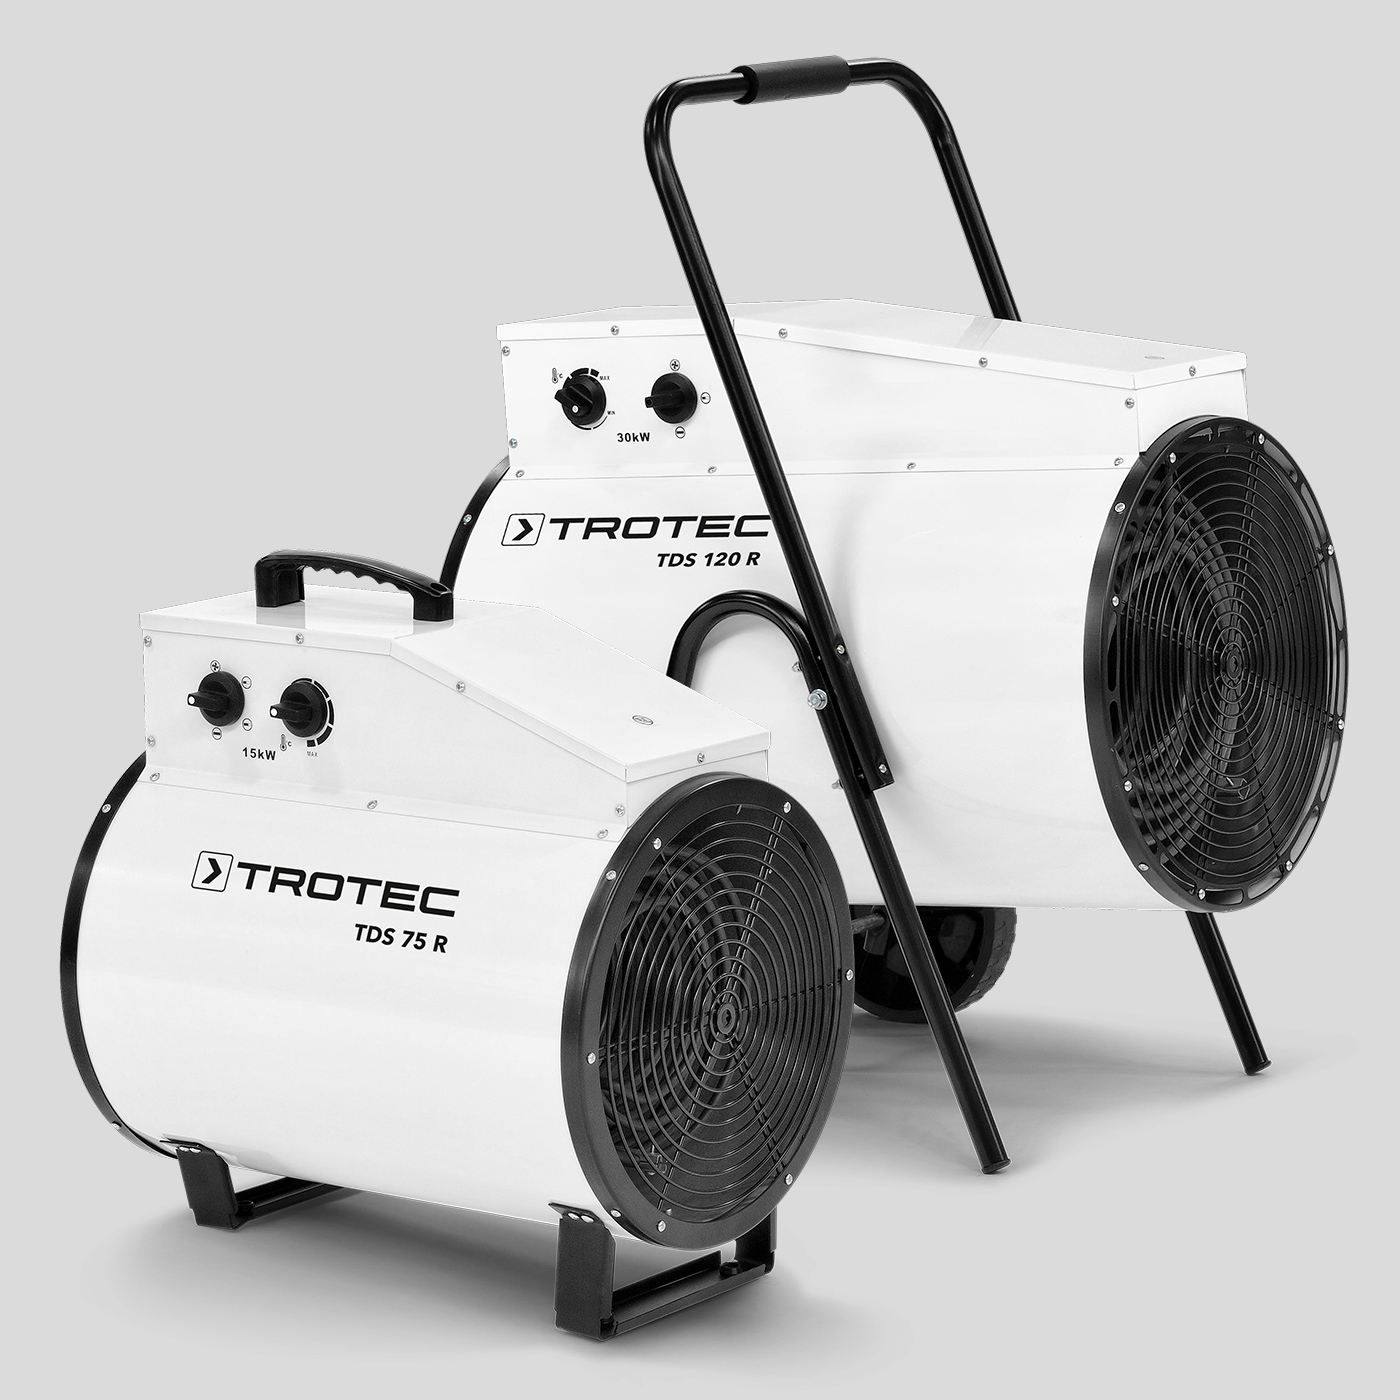 https://it.trotec.com/images/riscaldatori-elettrici-a-cannone-serie-tds-r-41c9.jpg